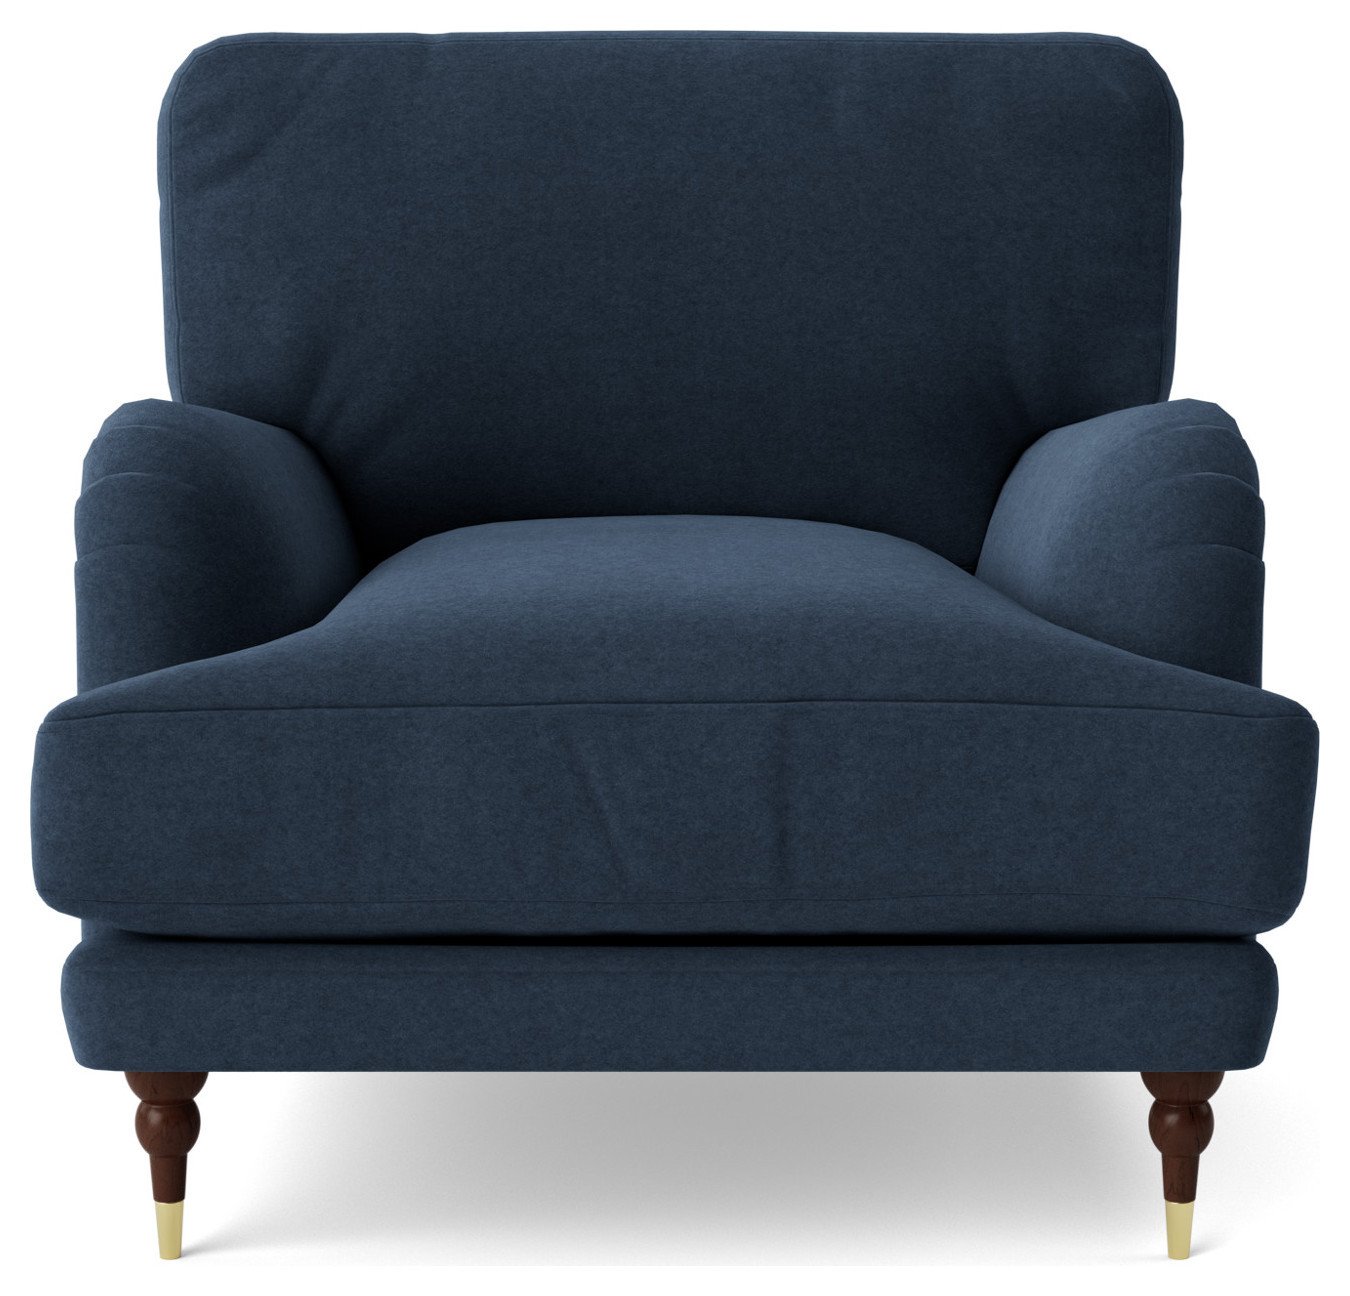 Swoon Charlbury Fabric Armchair - Indigo Blue